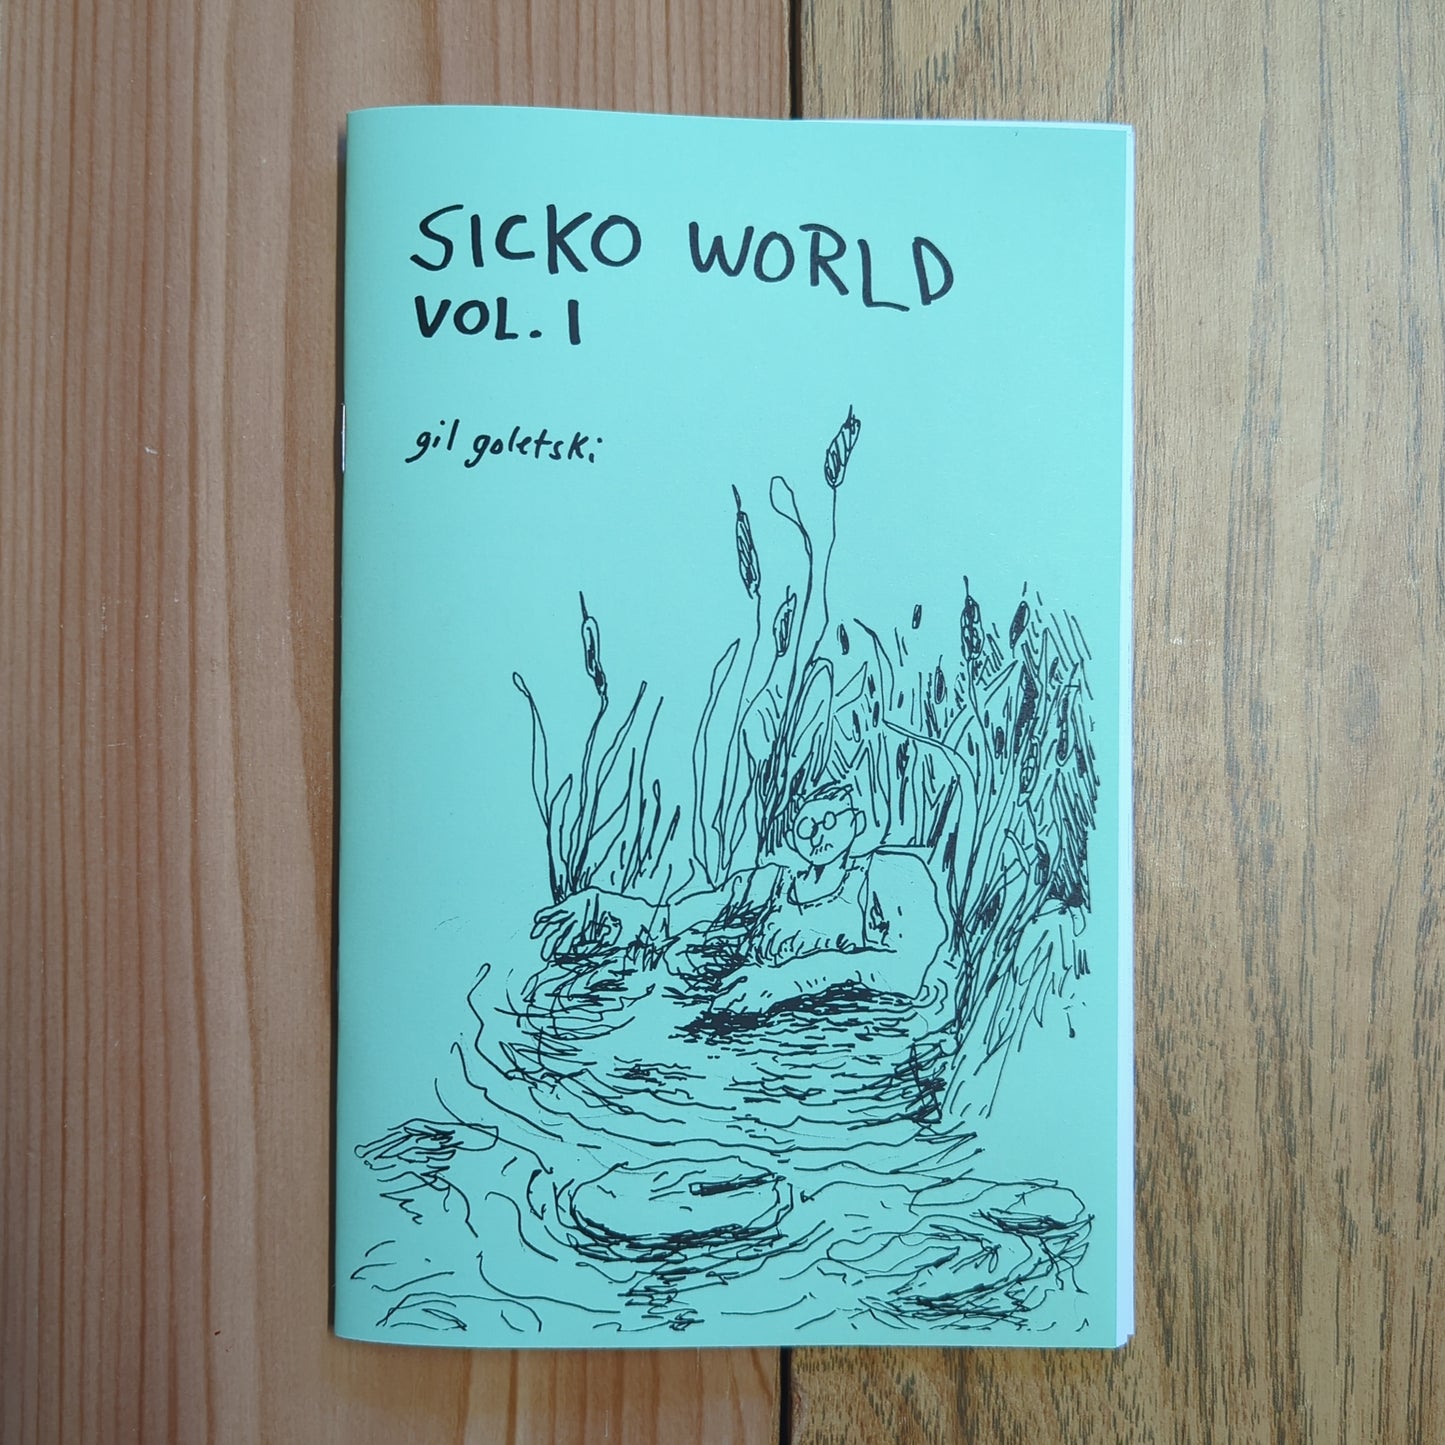 Sicko World Vol 1